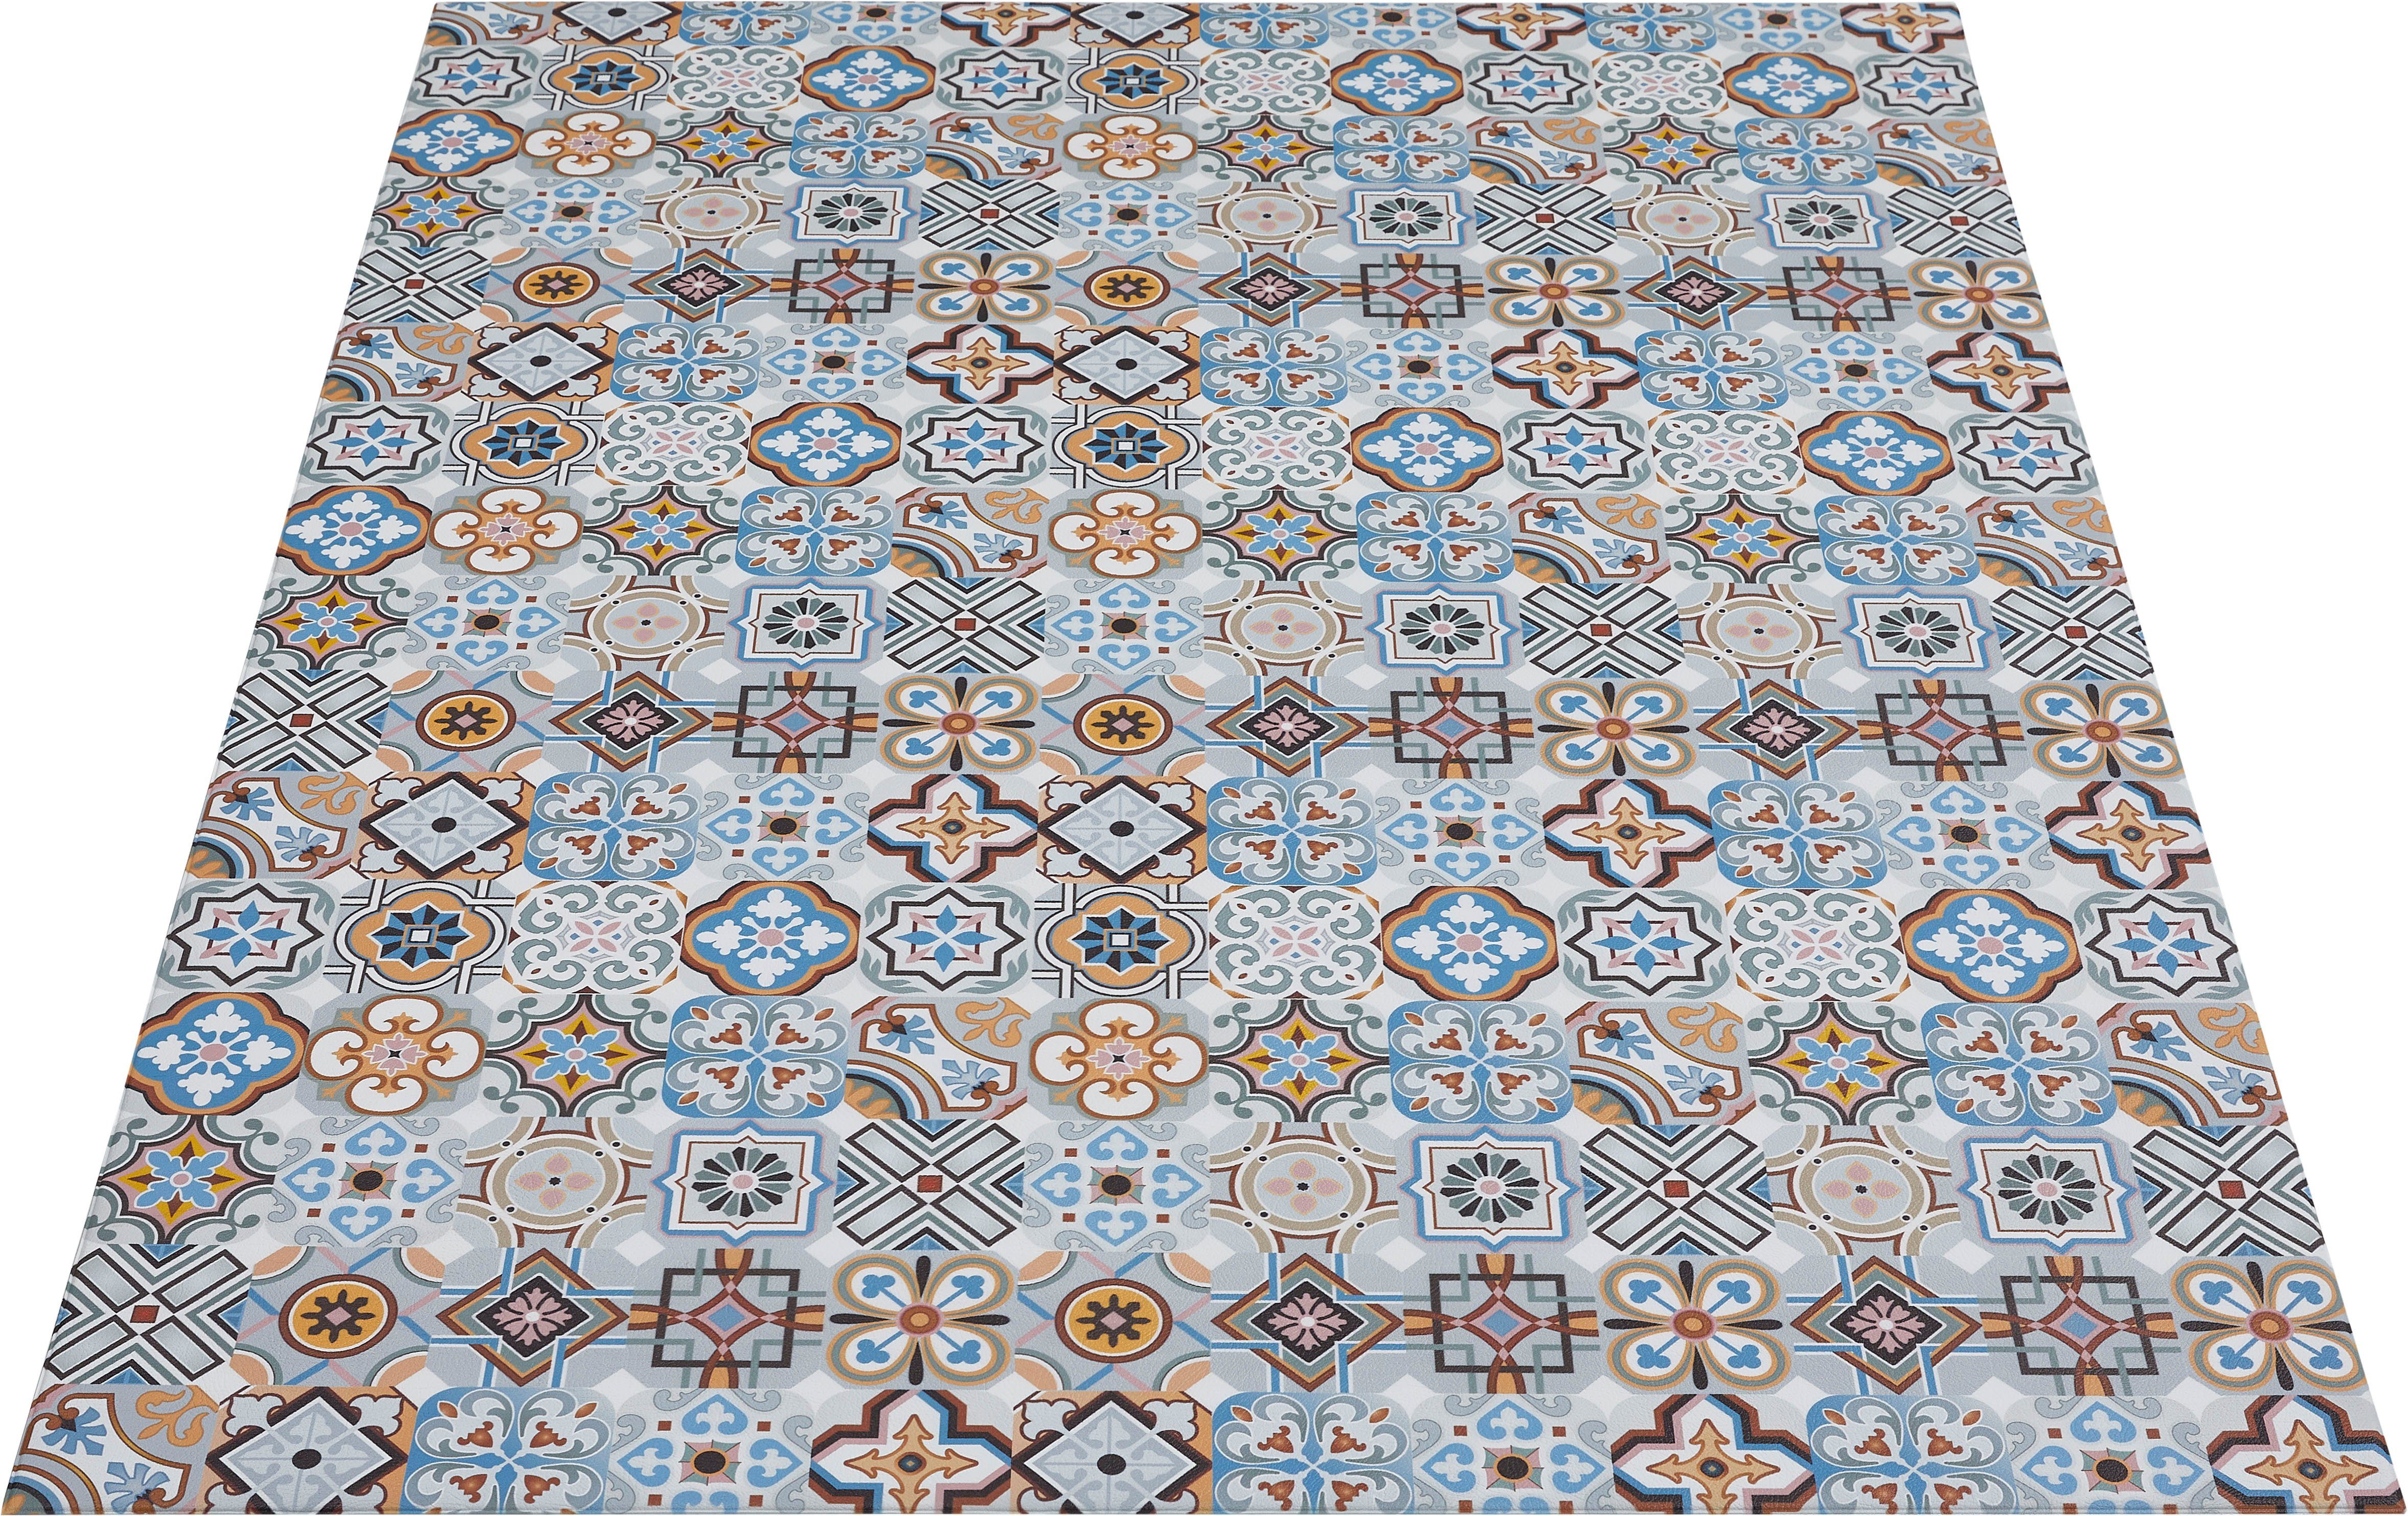 Vinylteppich Marrakesch, Andiamo, rechteckig, Höhe: 5 mm, abwischbar, rutschhemmend, Fliesen Design, Ornamente blau/grau